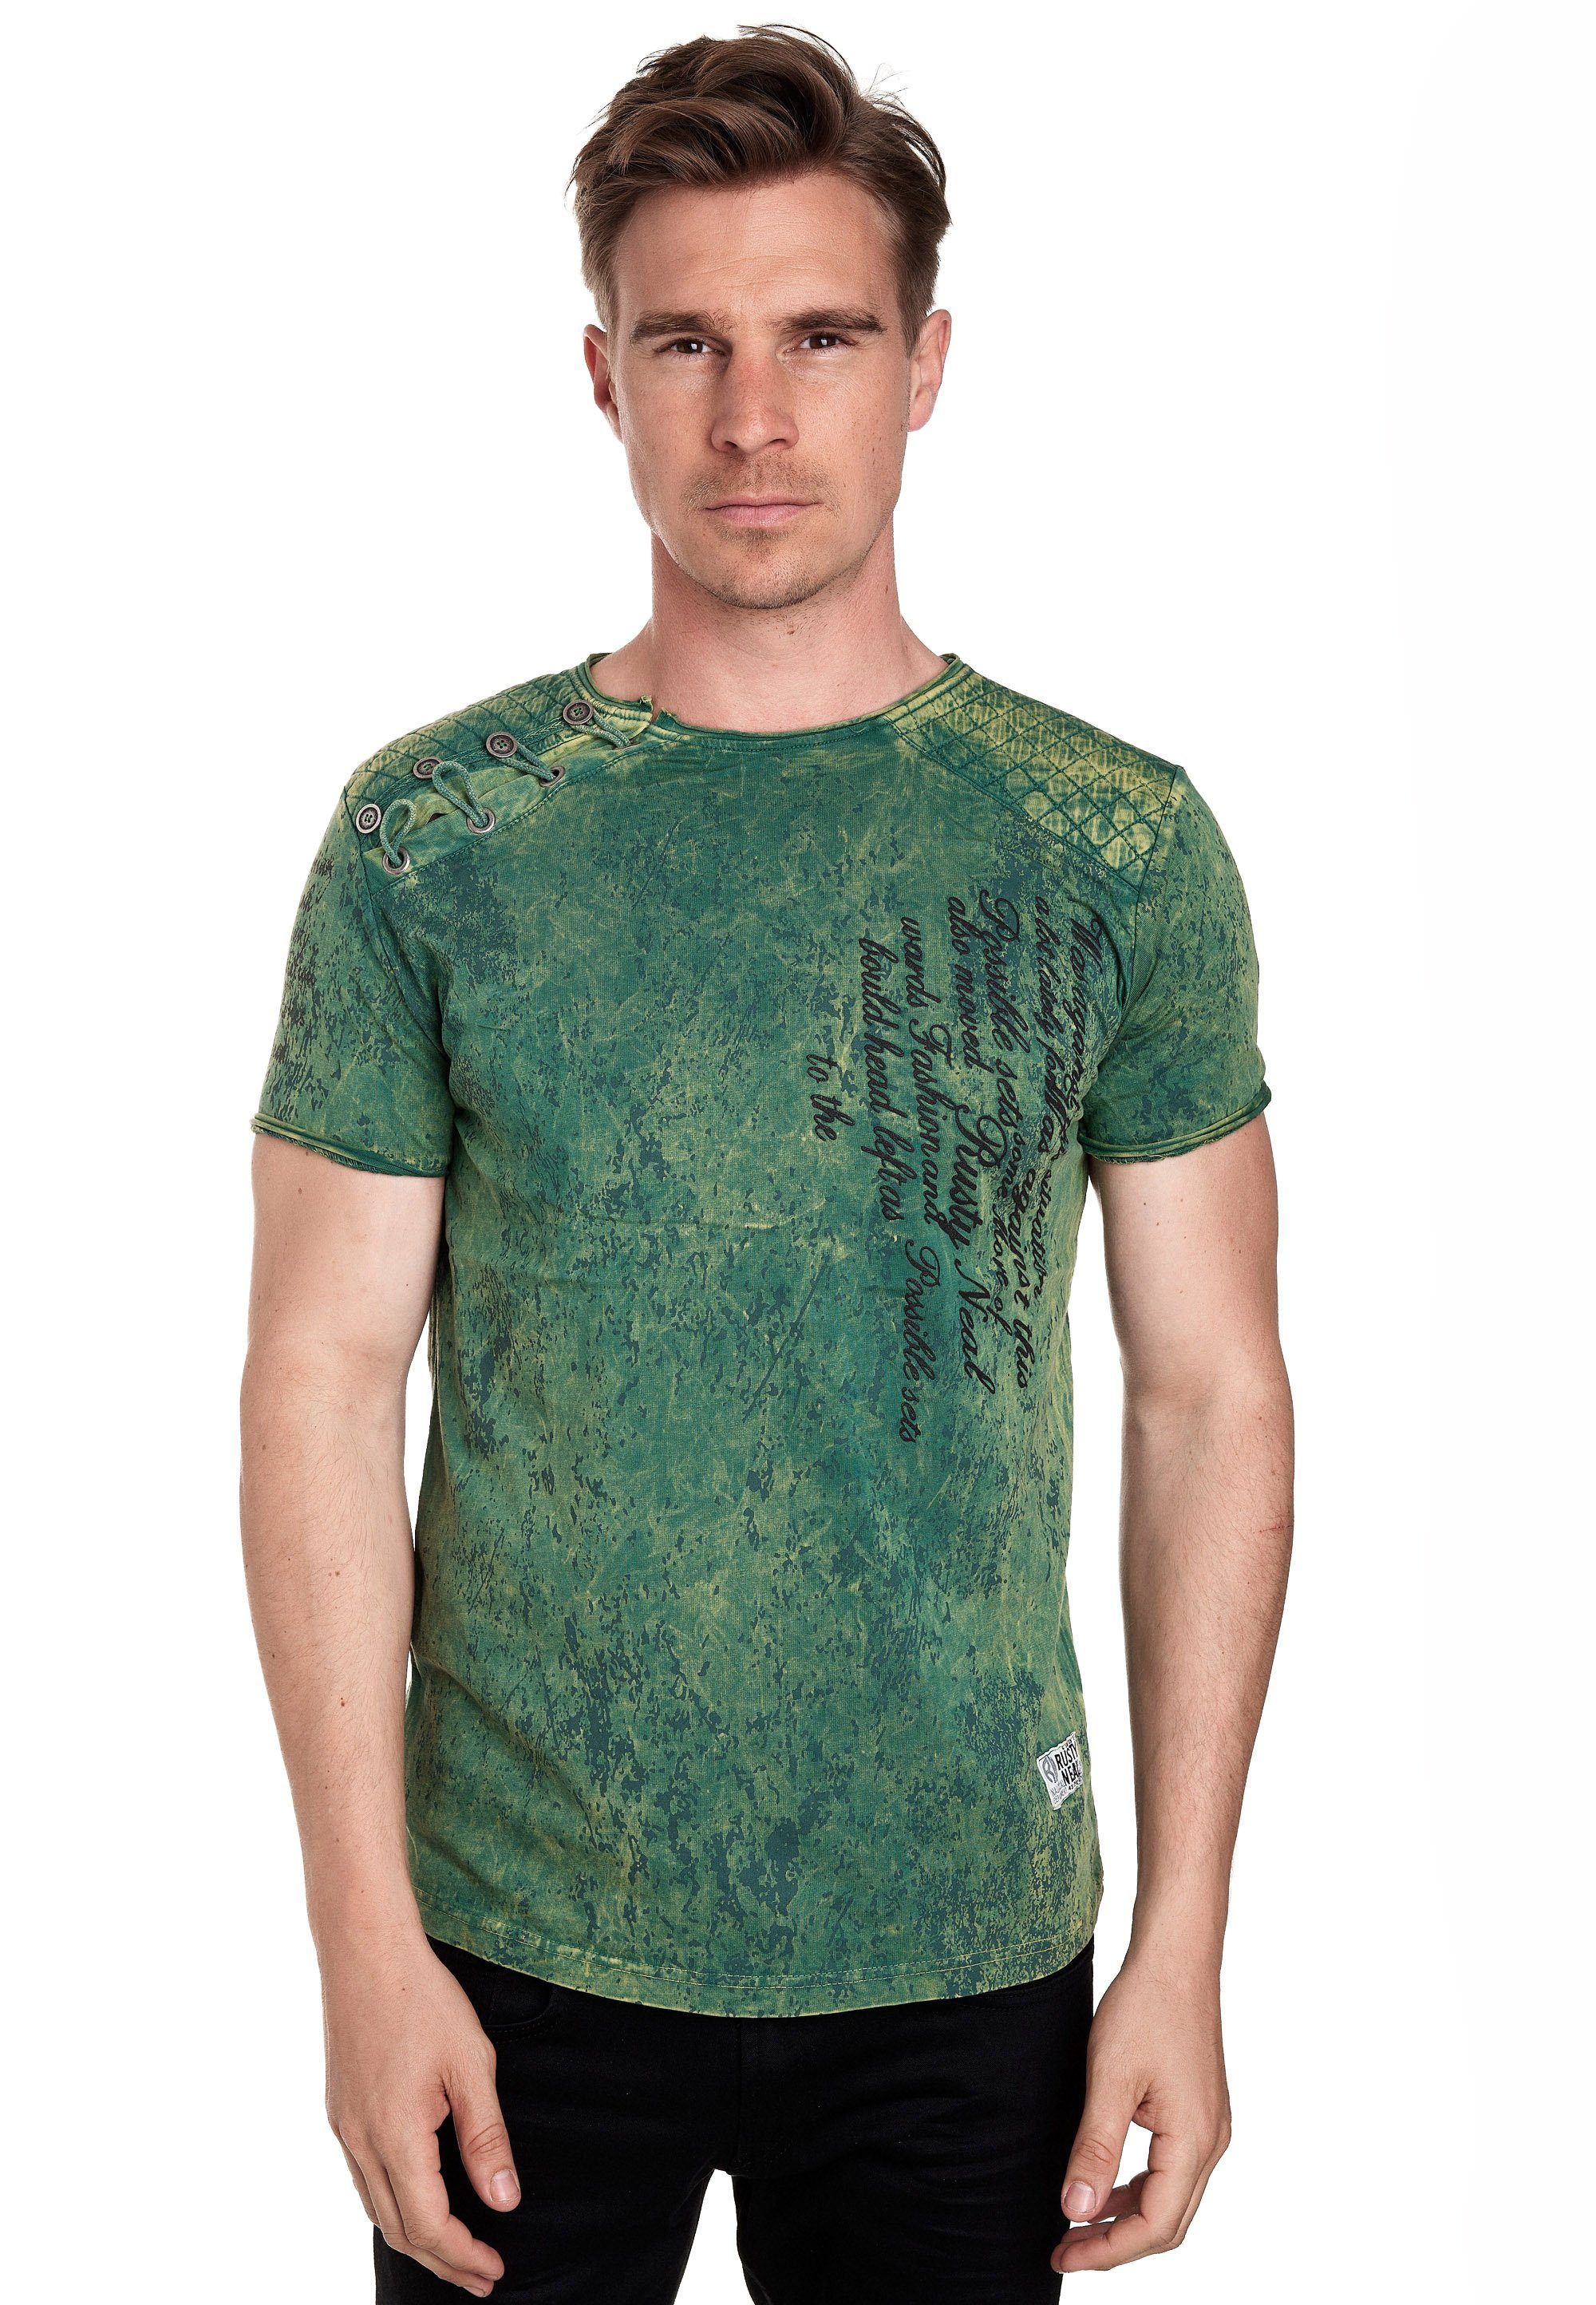 Vintage-Look im tollen Neal T-Shirt dunkelgrün Rusty